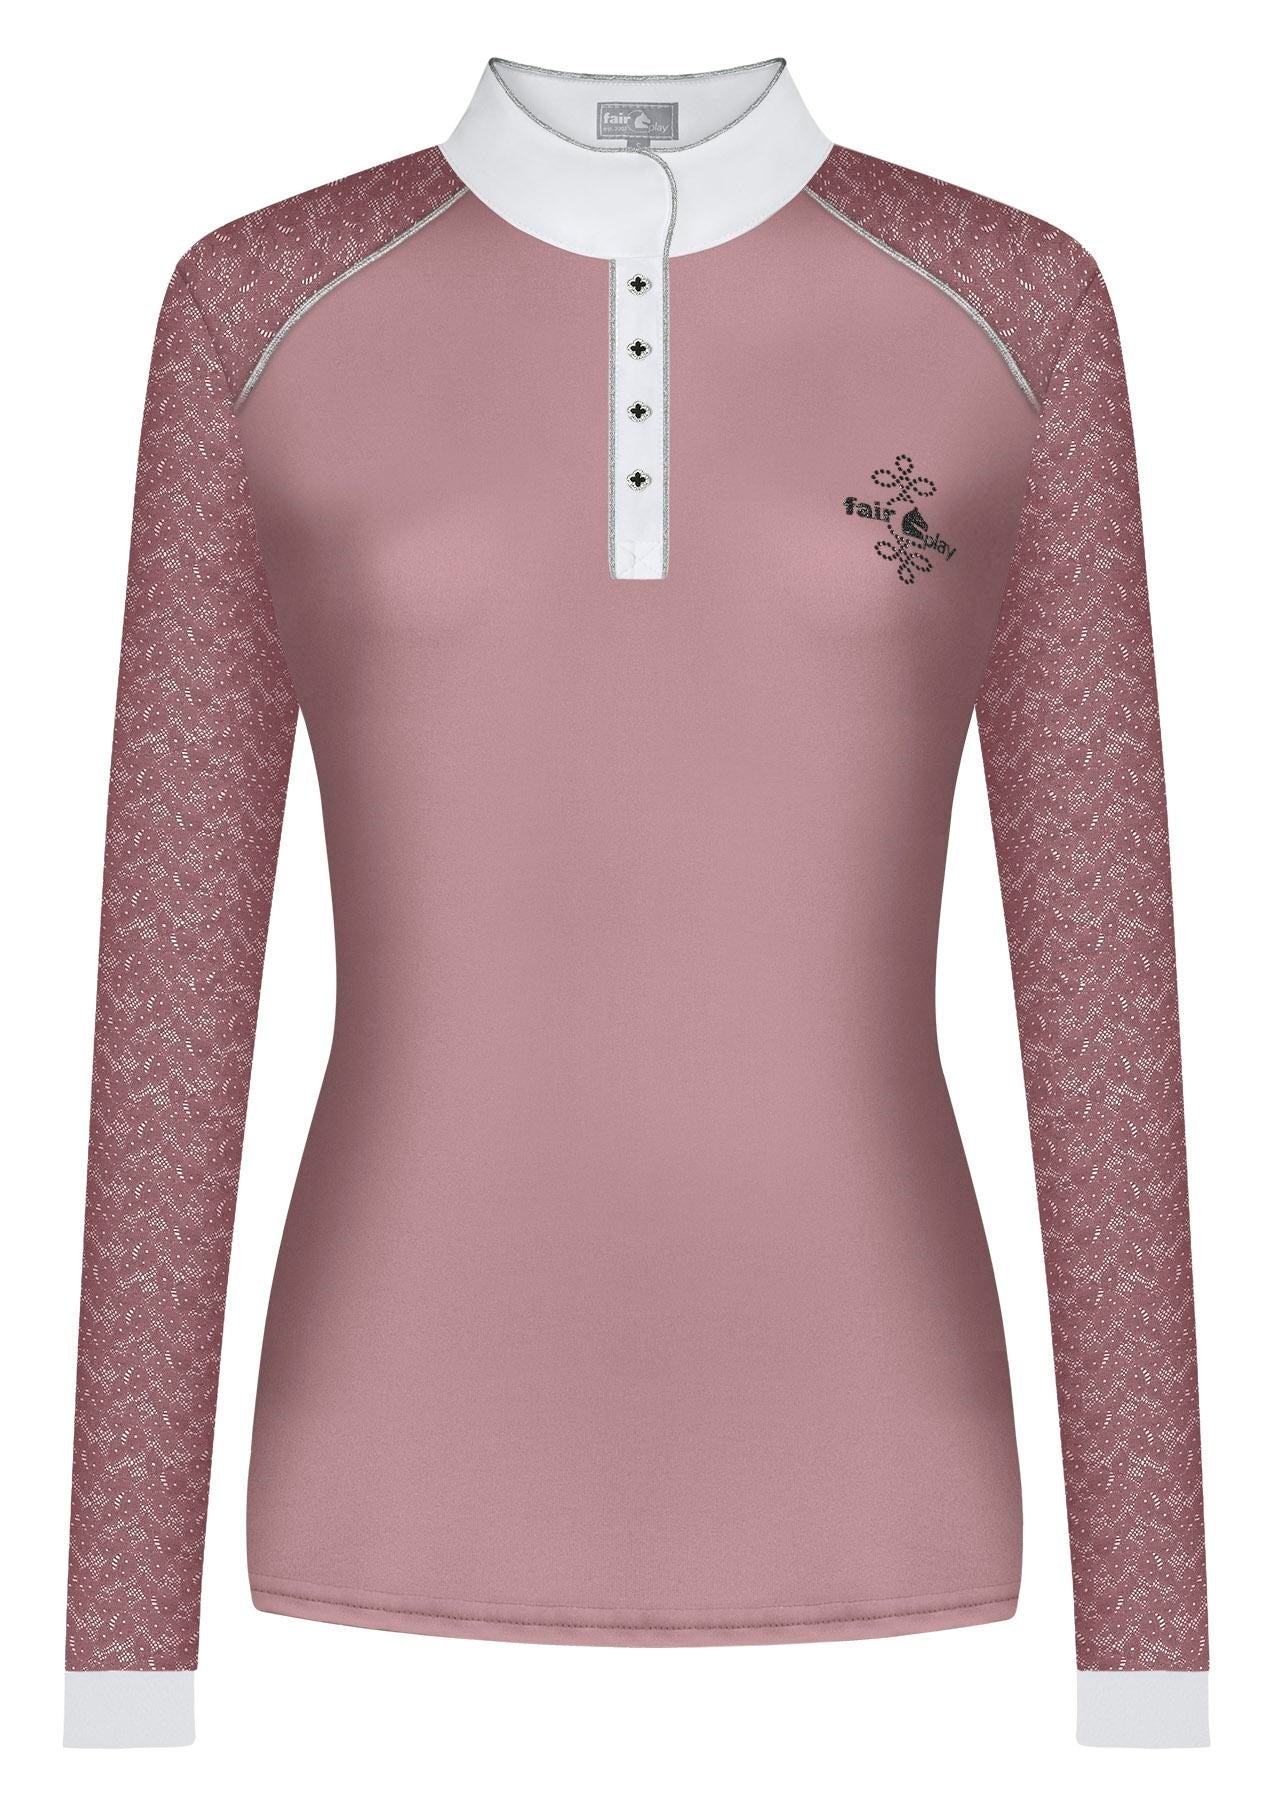 Anita long sleeve FairPlay competition shirt